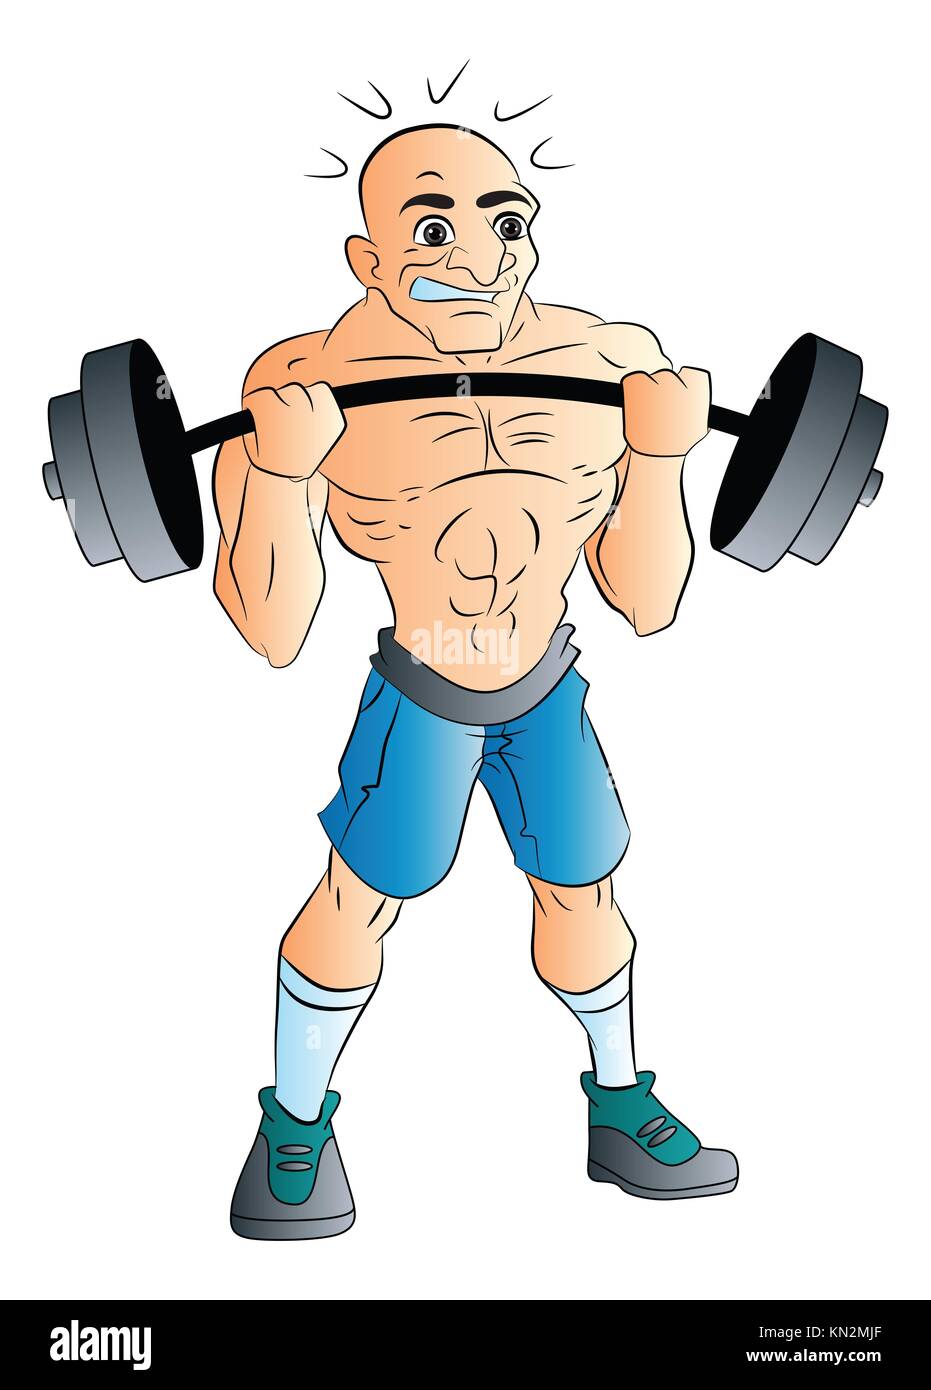 Musculation Homme Athlétique Musculation Image stock - Image du